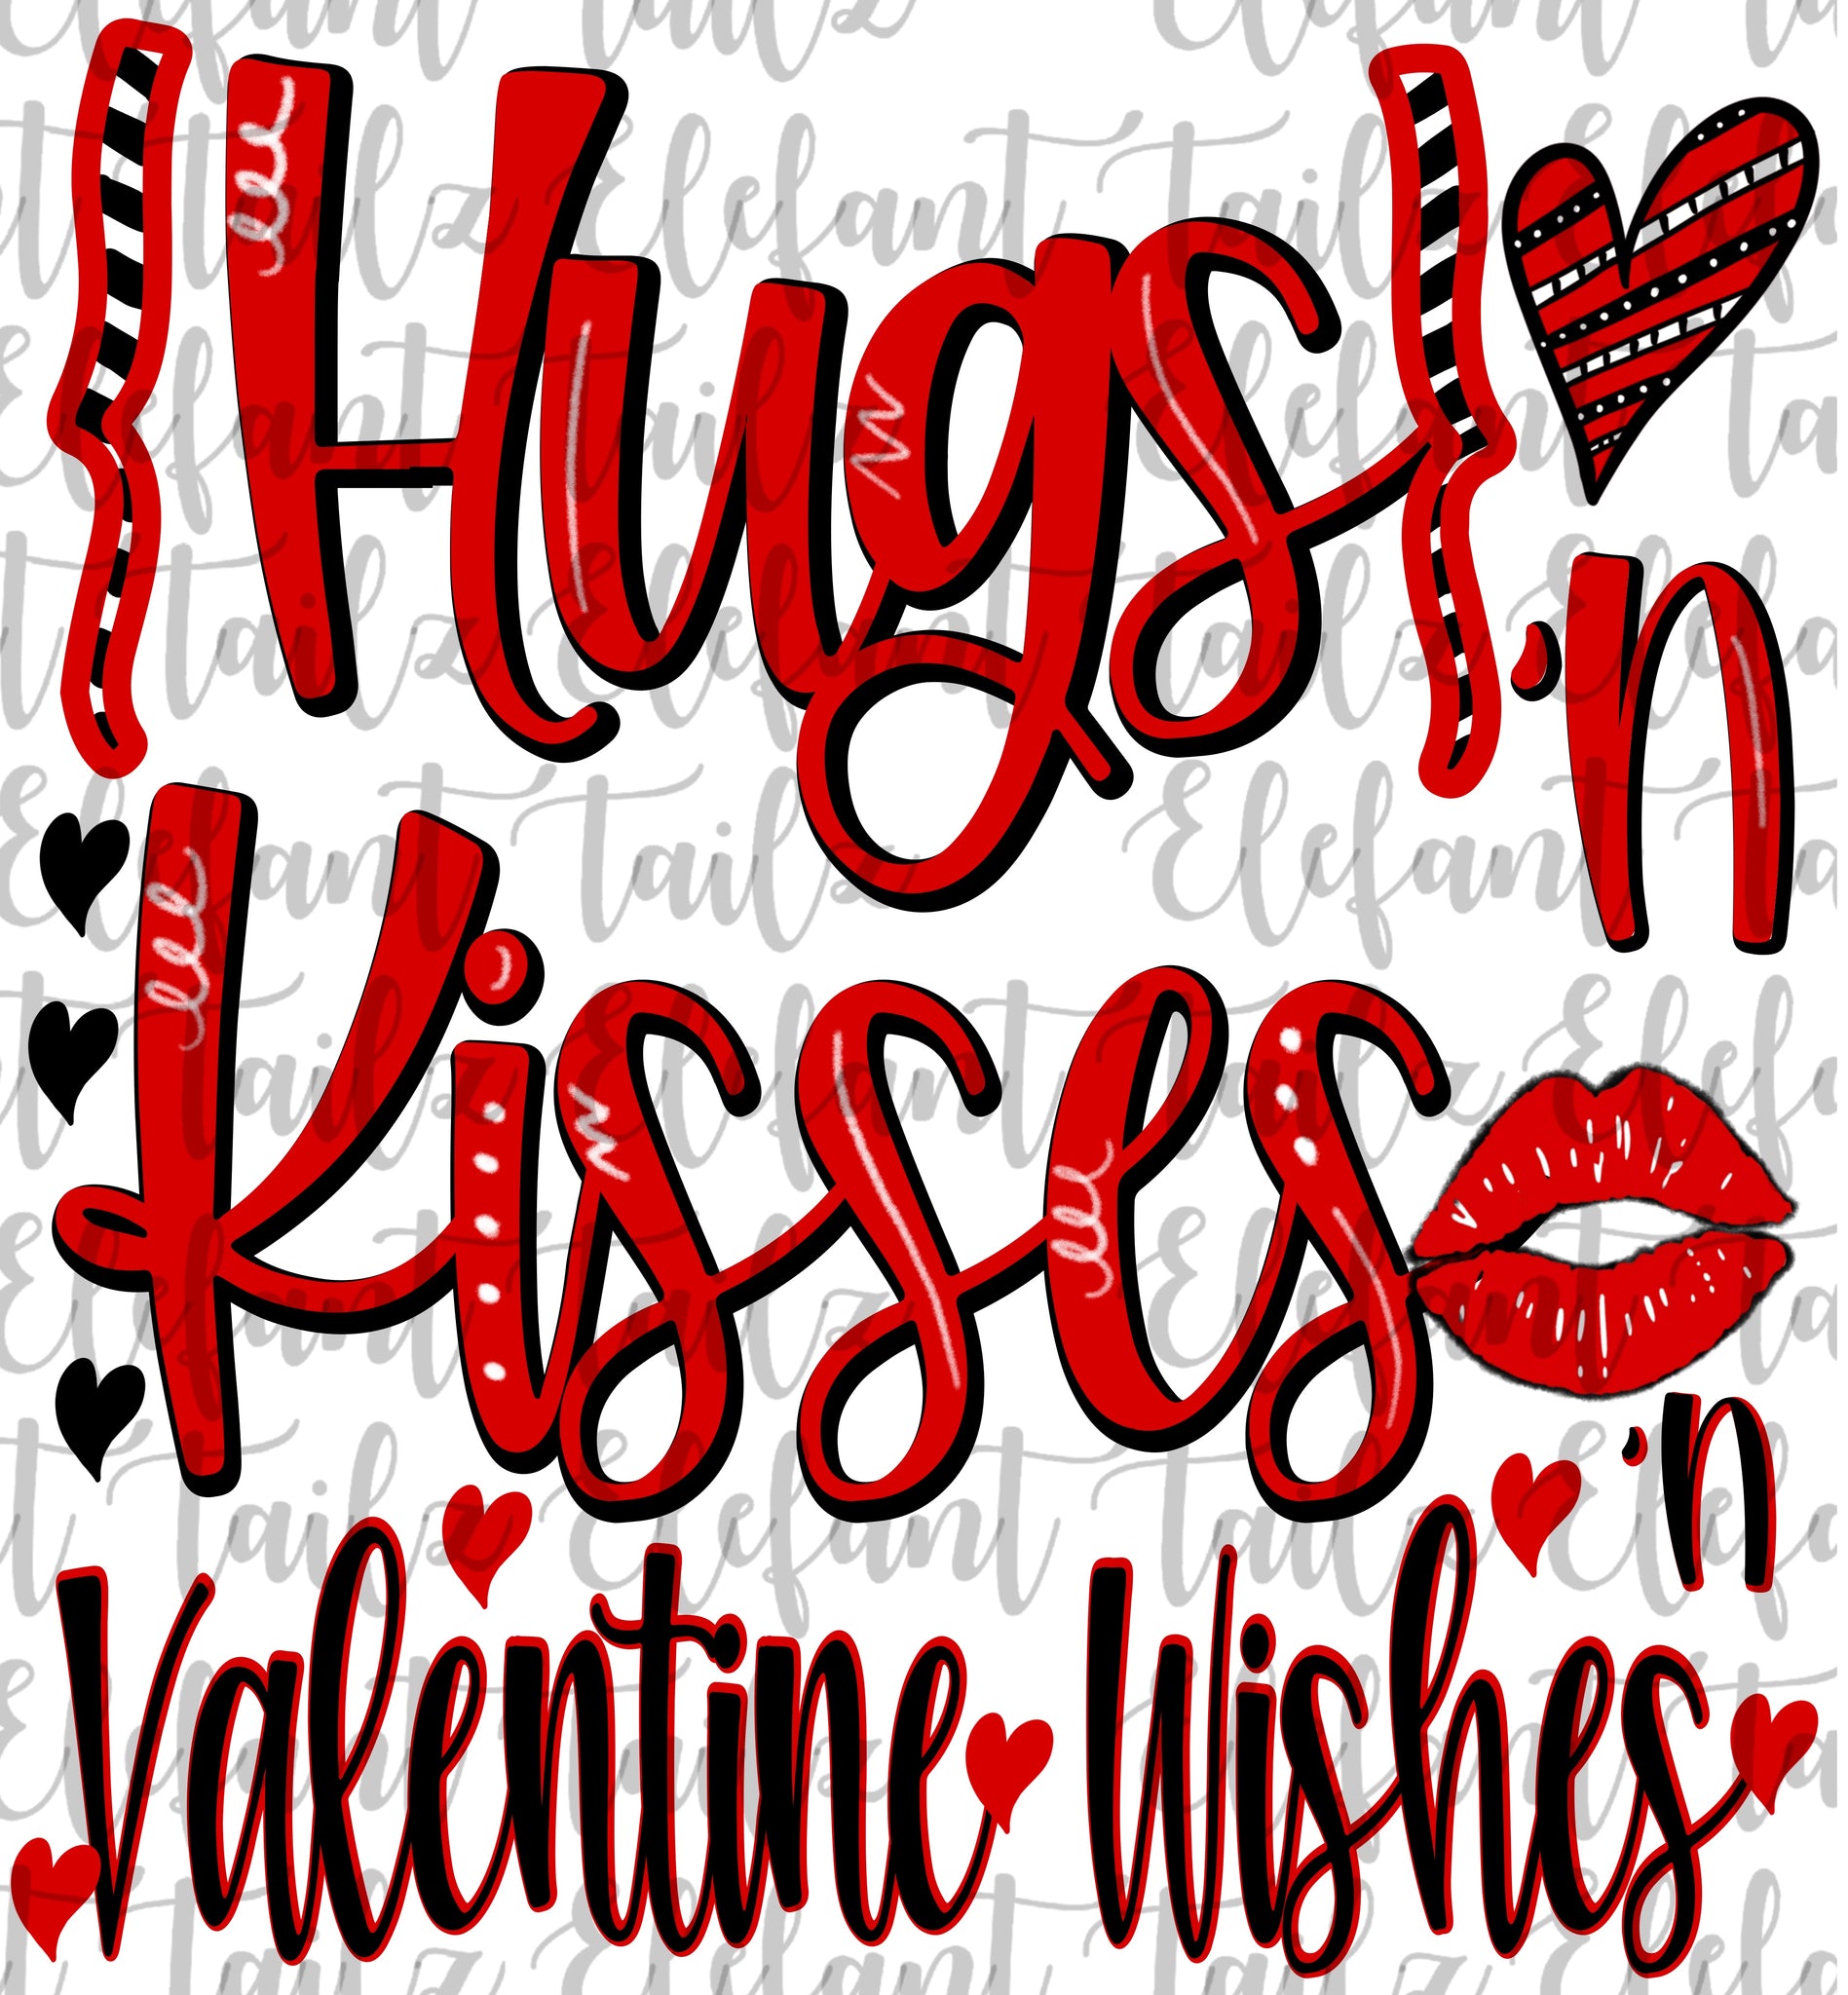 Hugs & Kisses & Valentine Wishes